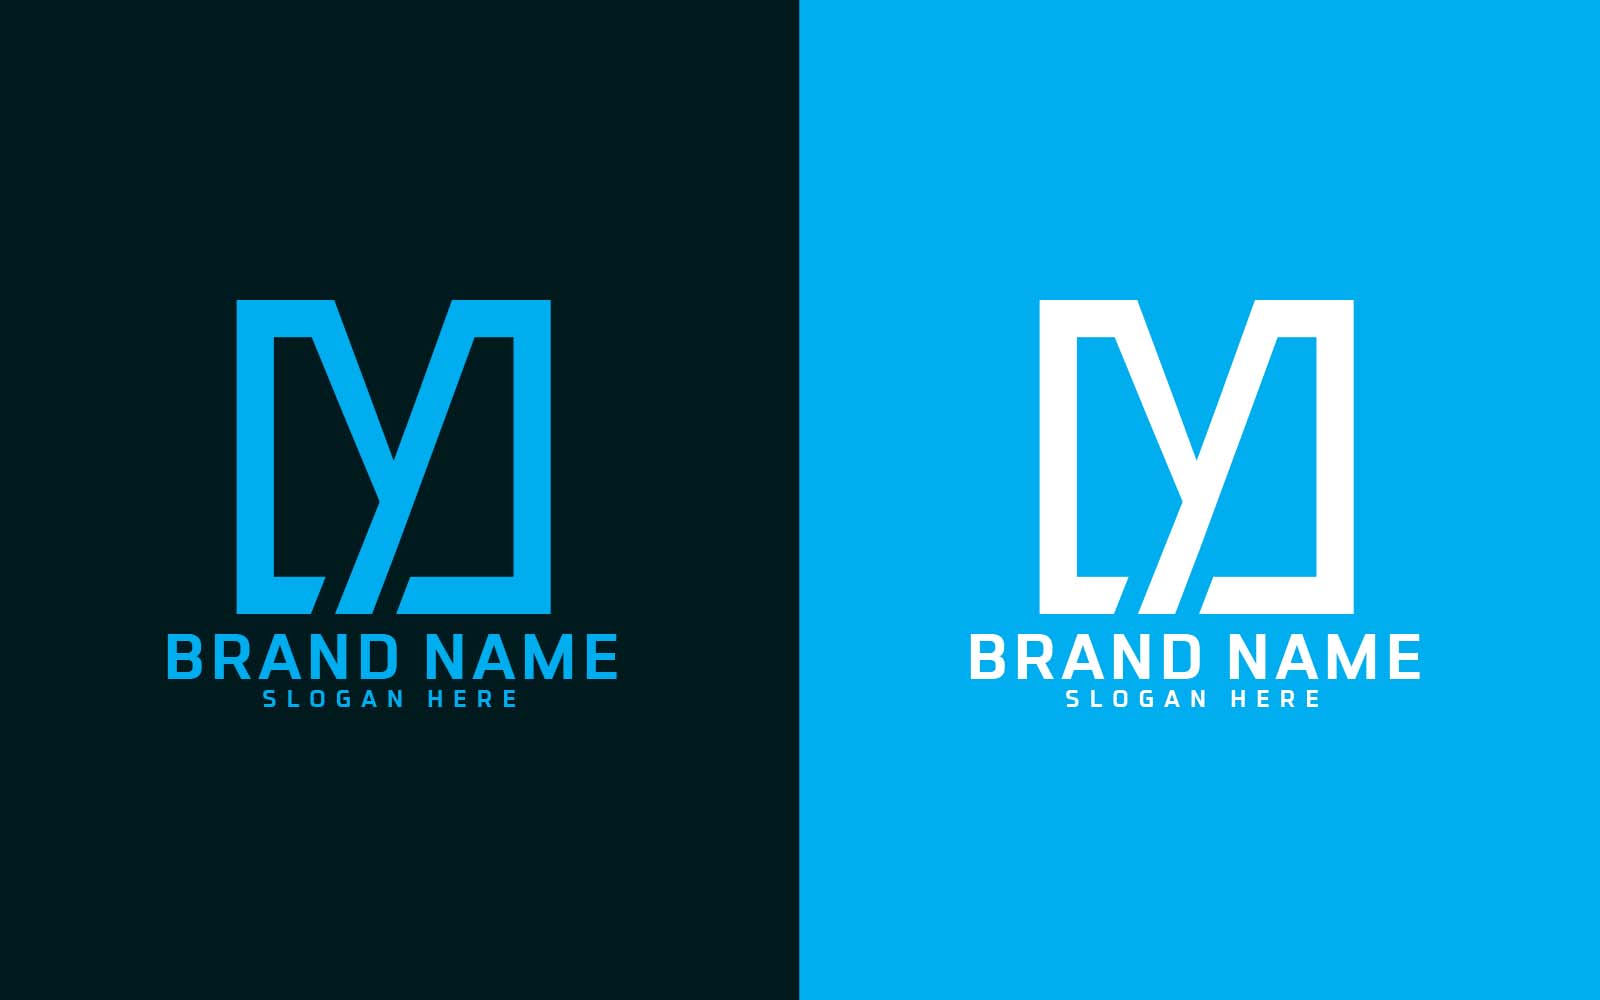 Creative Photography MM Letter Logo Design - TemplateMonster